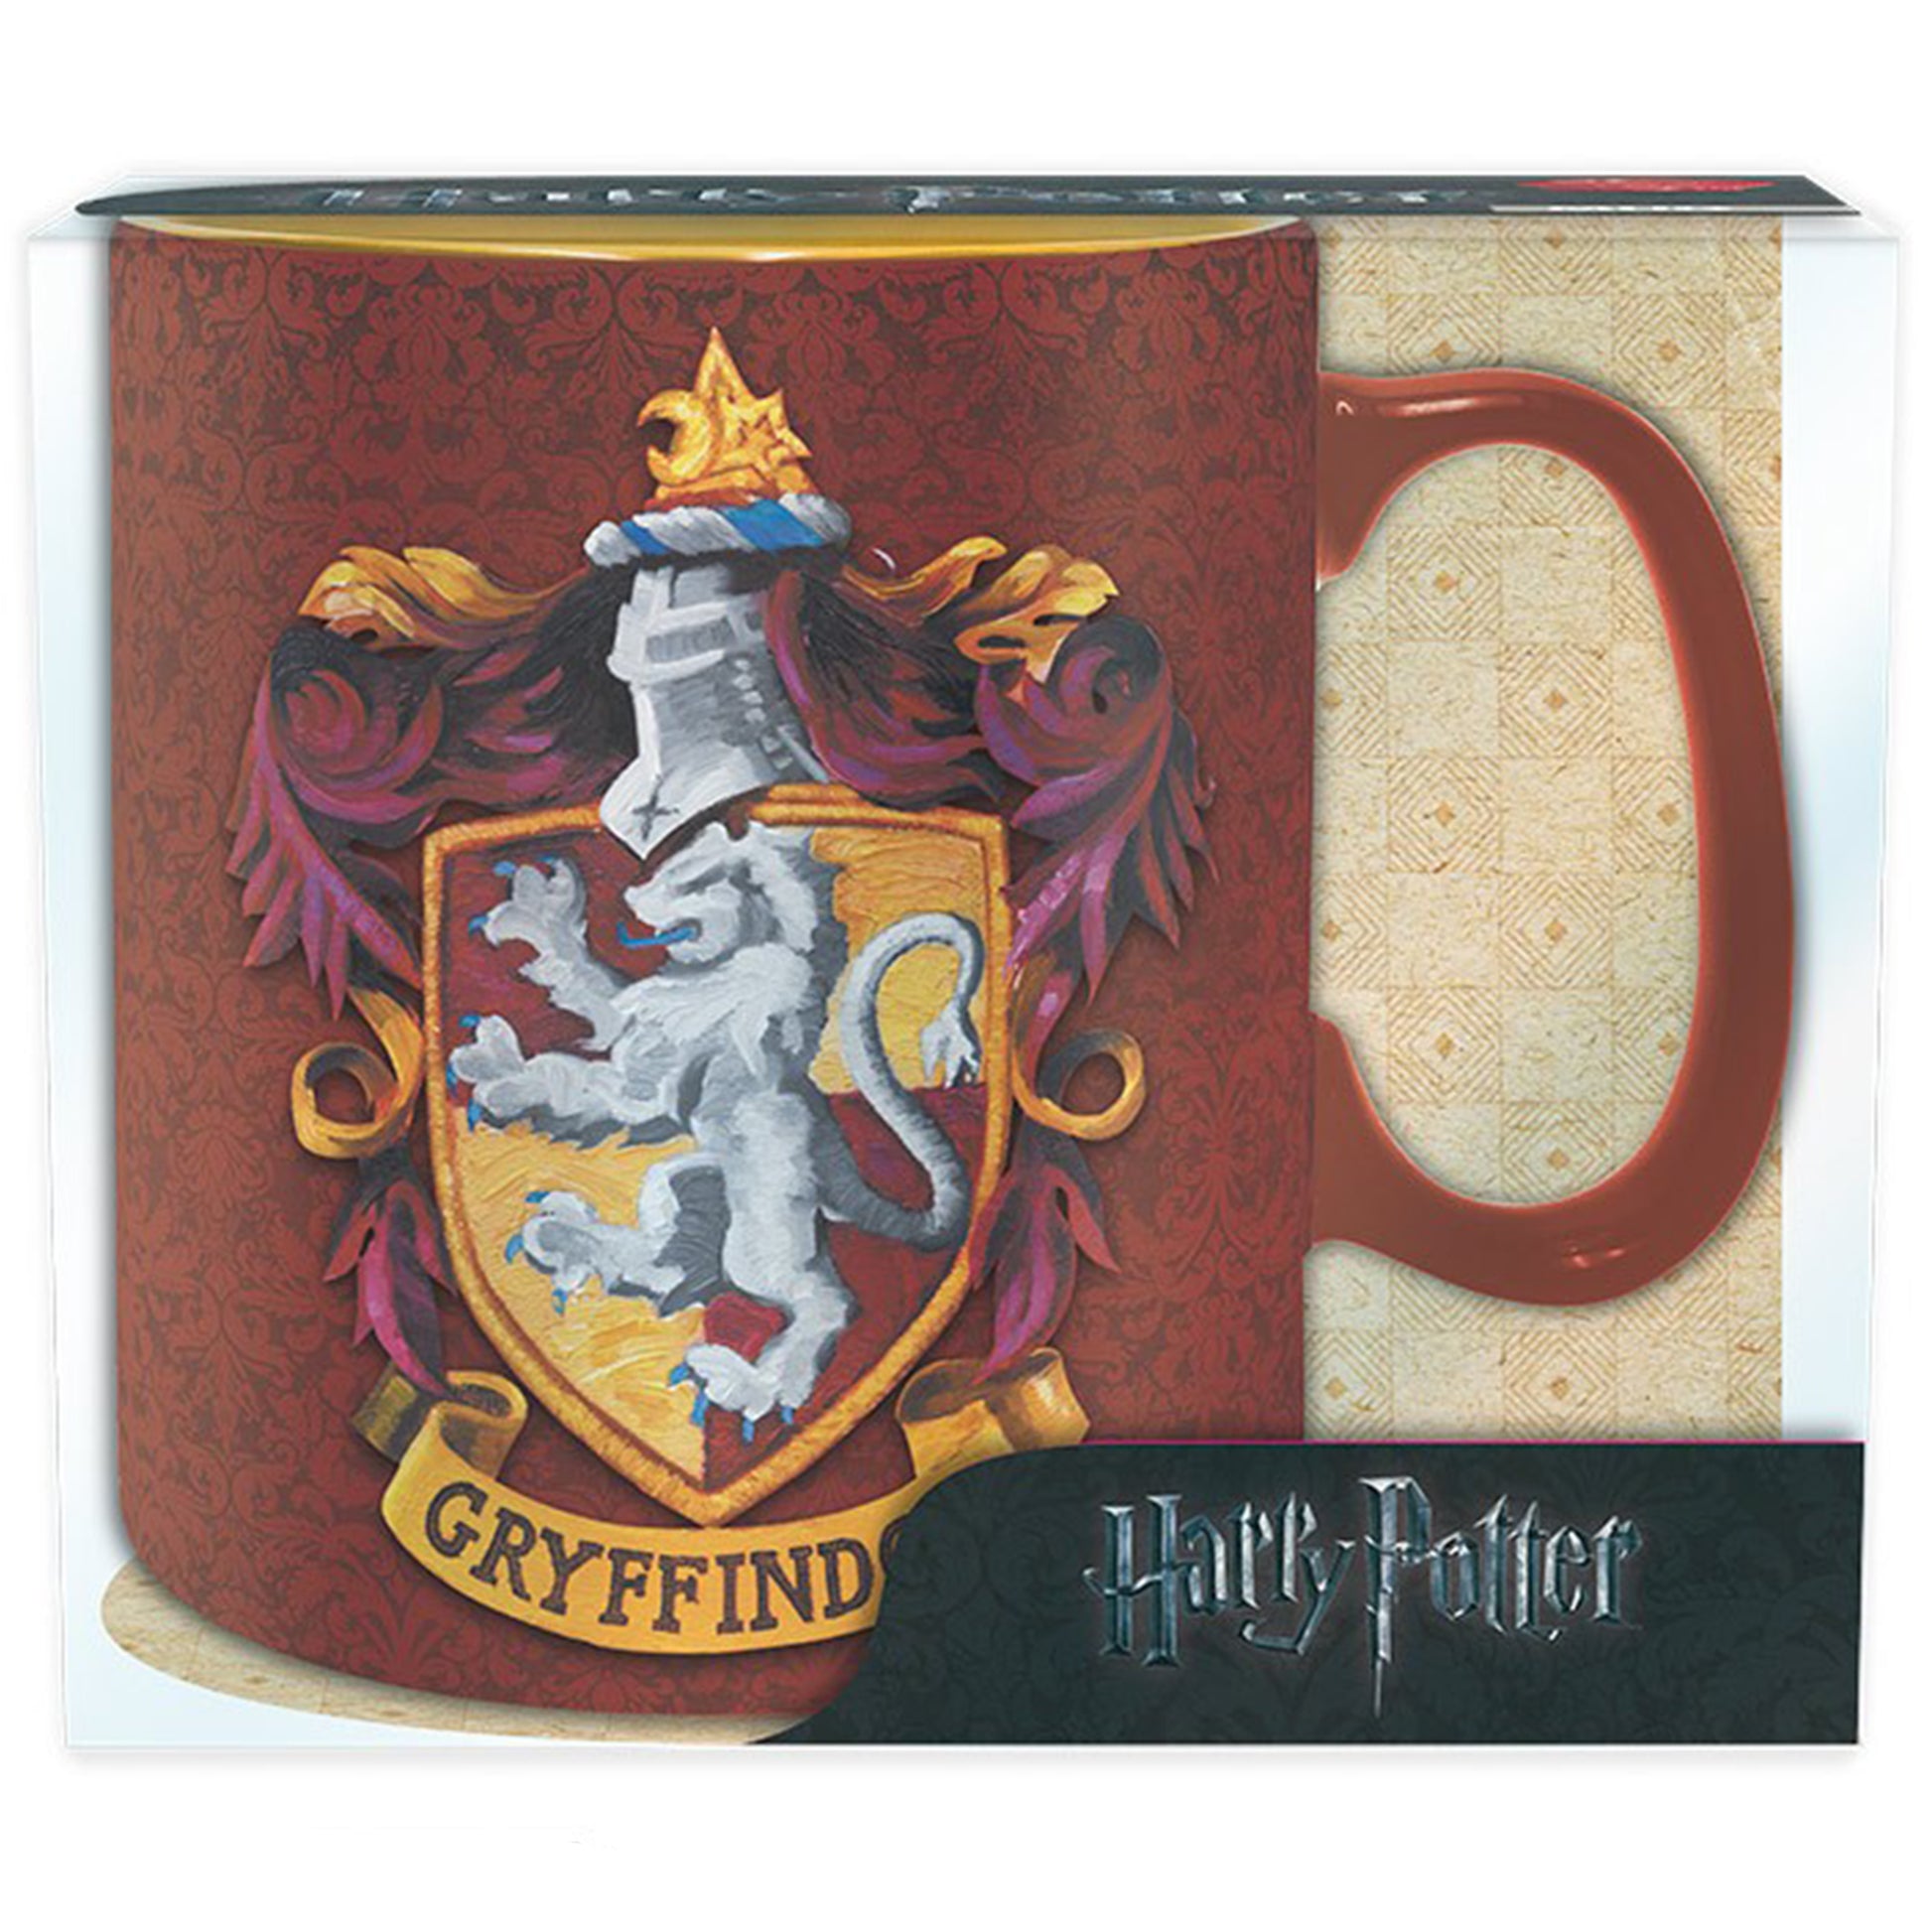 Gryffindor - King Size Harry Potter Mug in Packaging | Happy Piranha